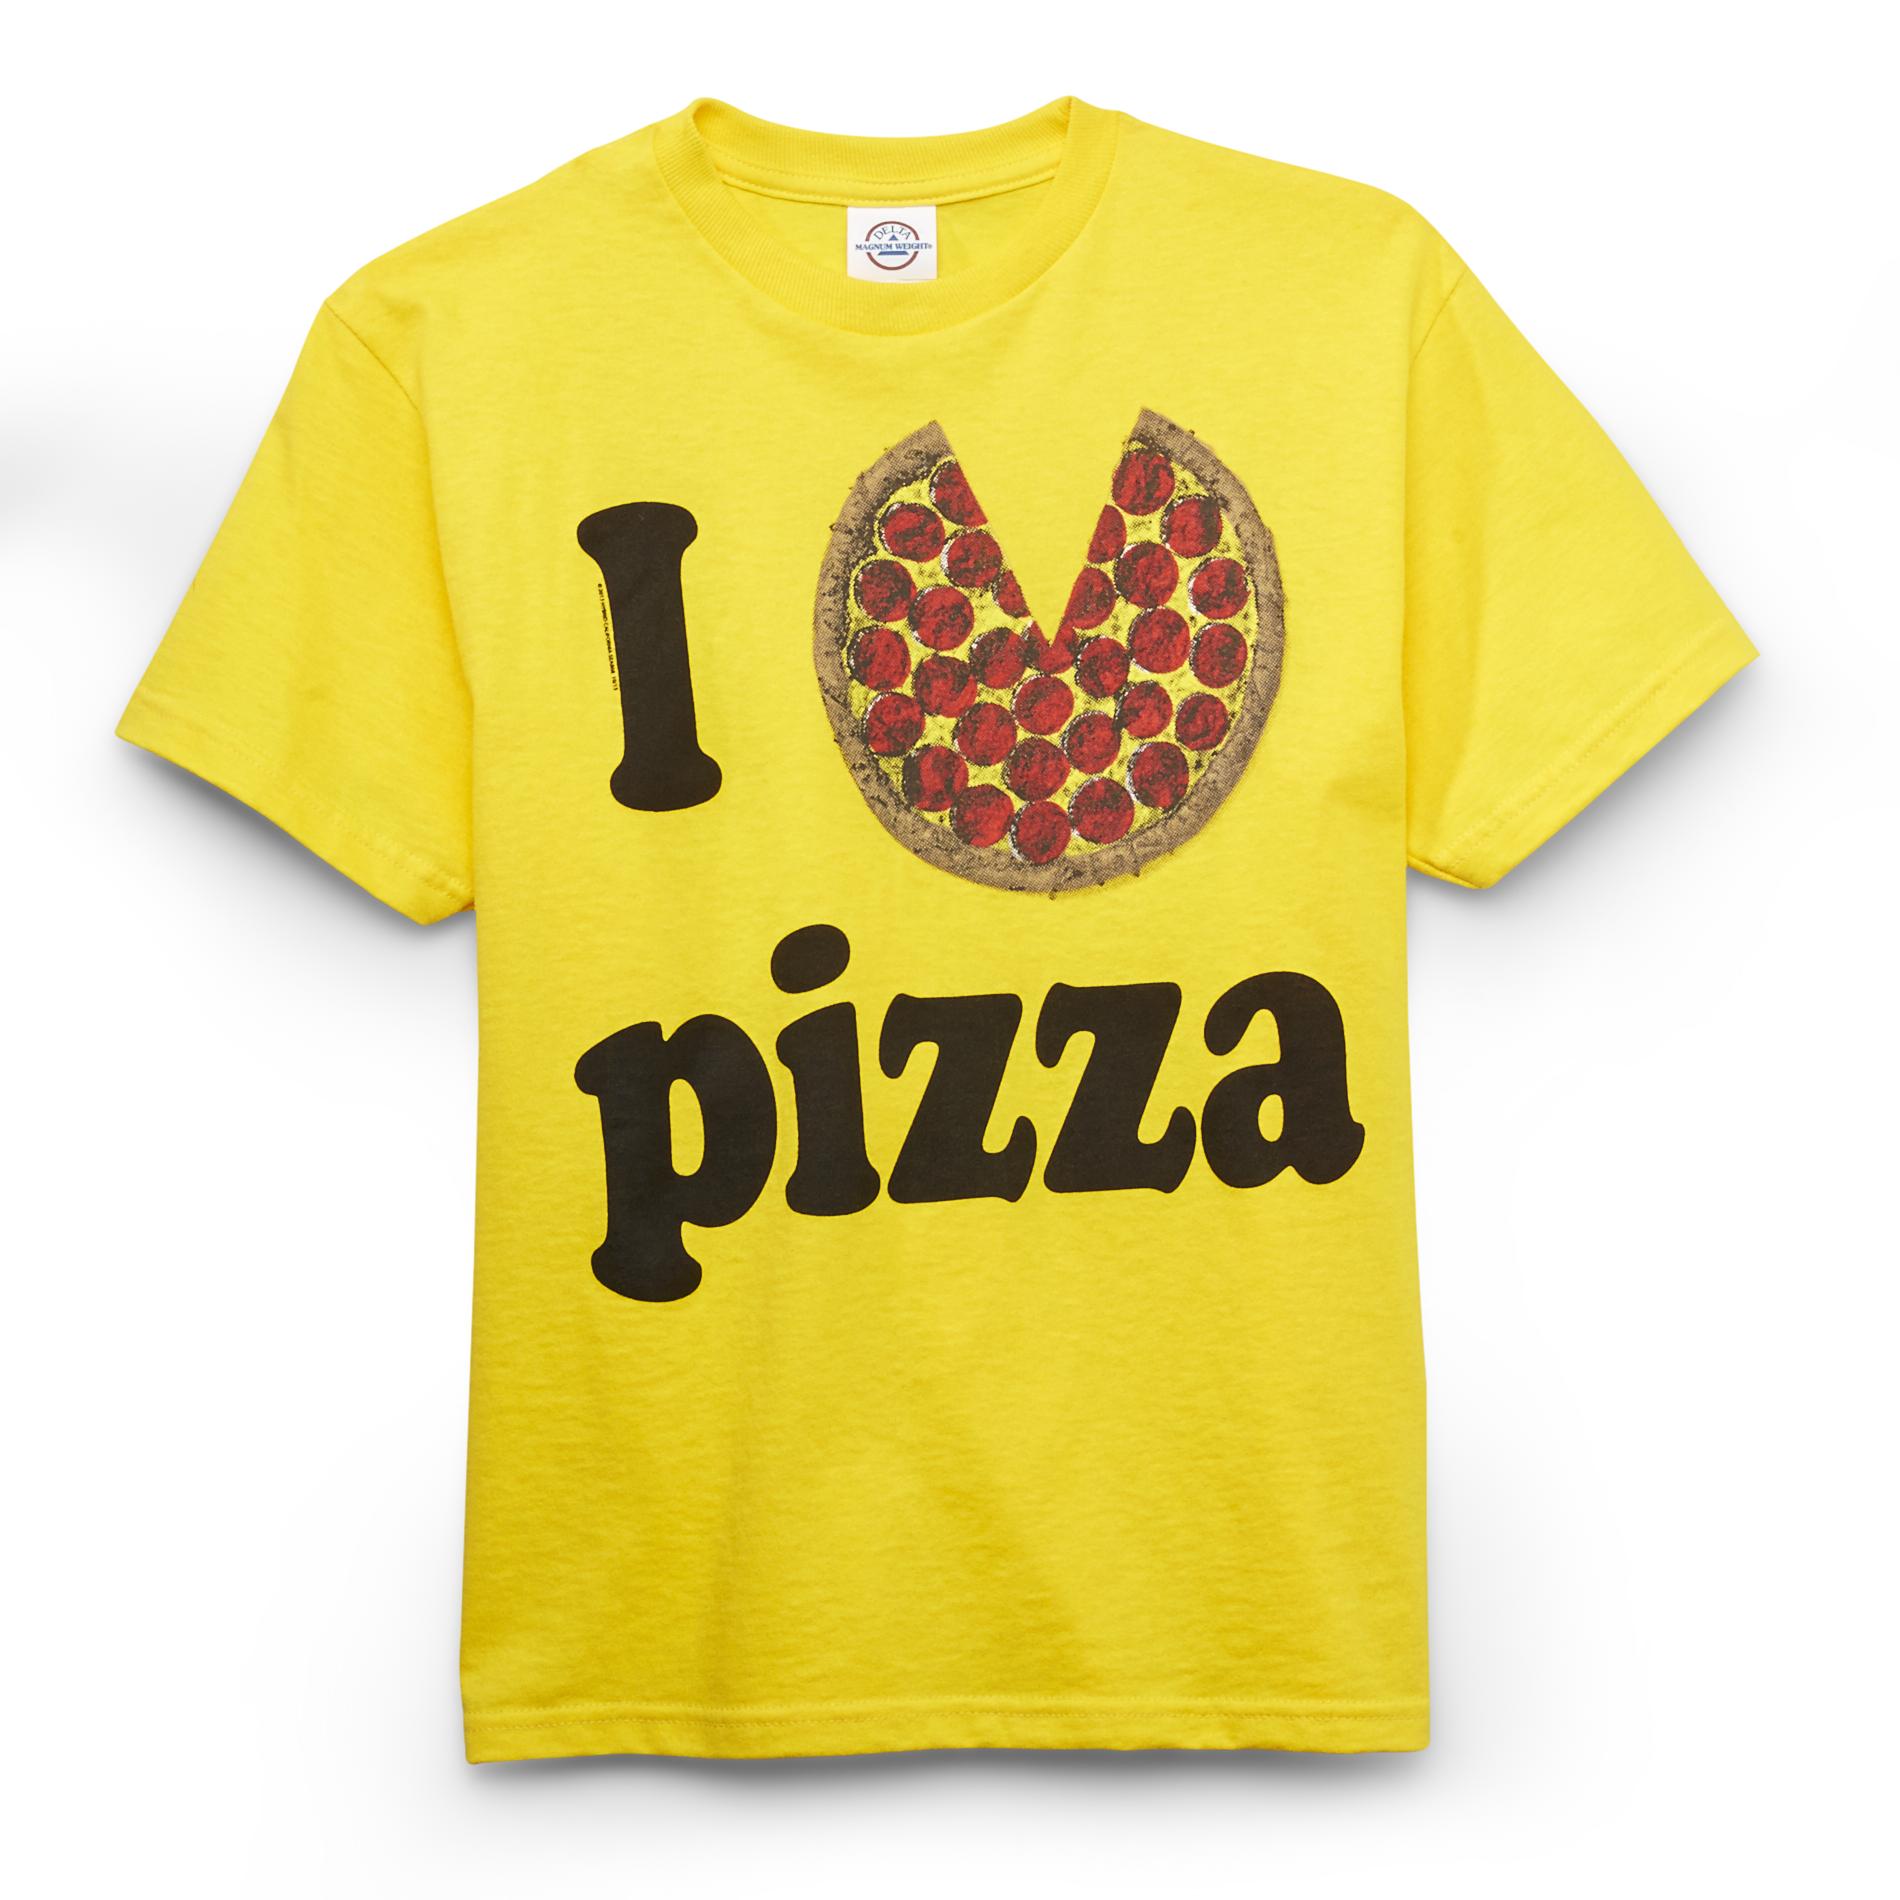 Hybrid Boy's Graphic T-Shirt - Pizza